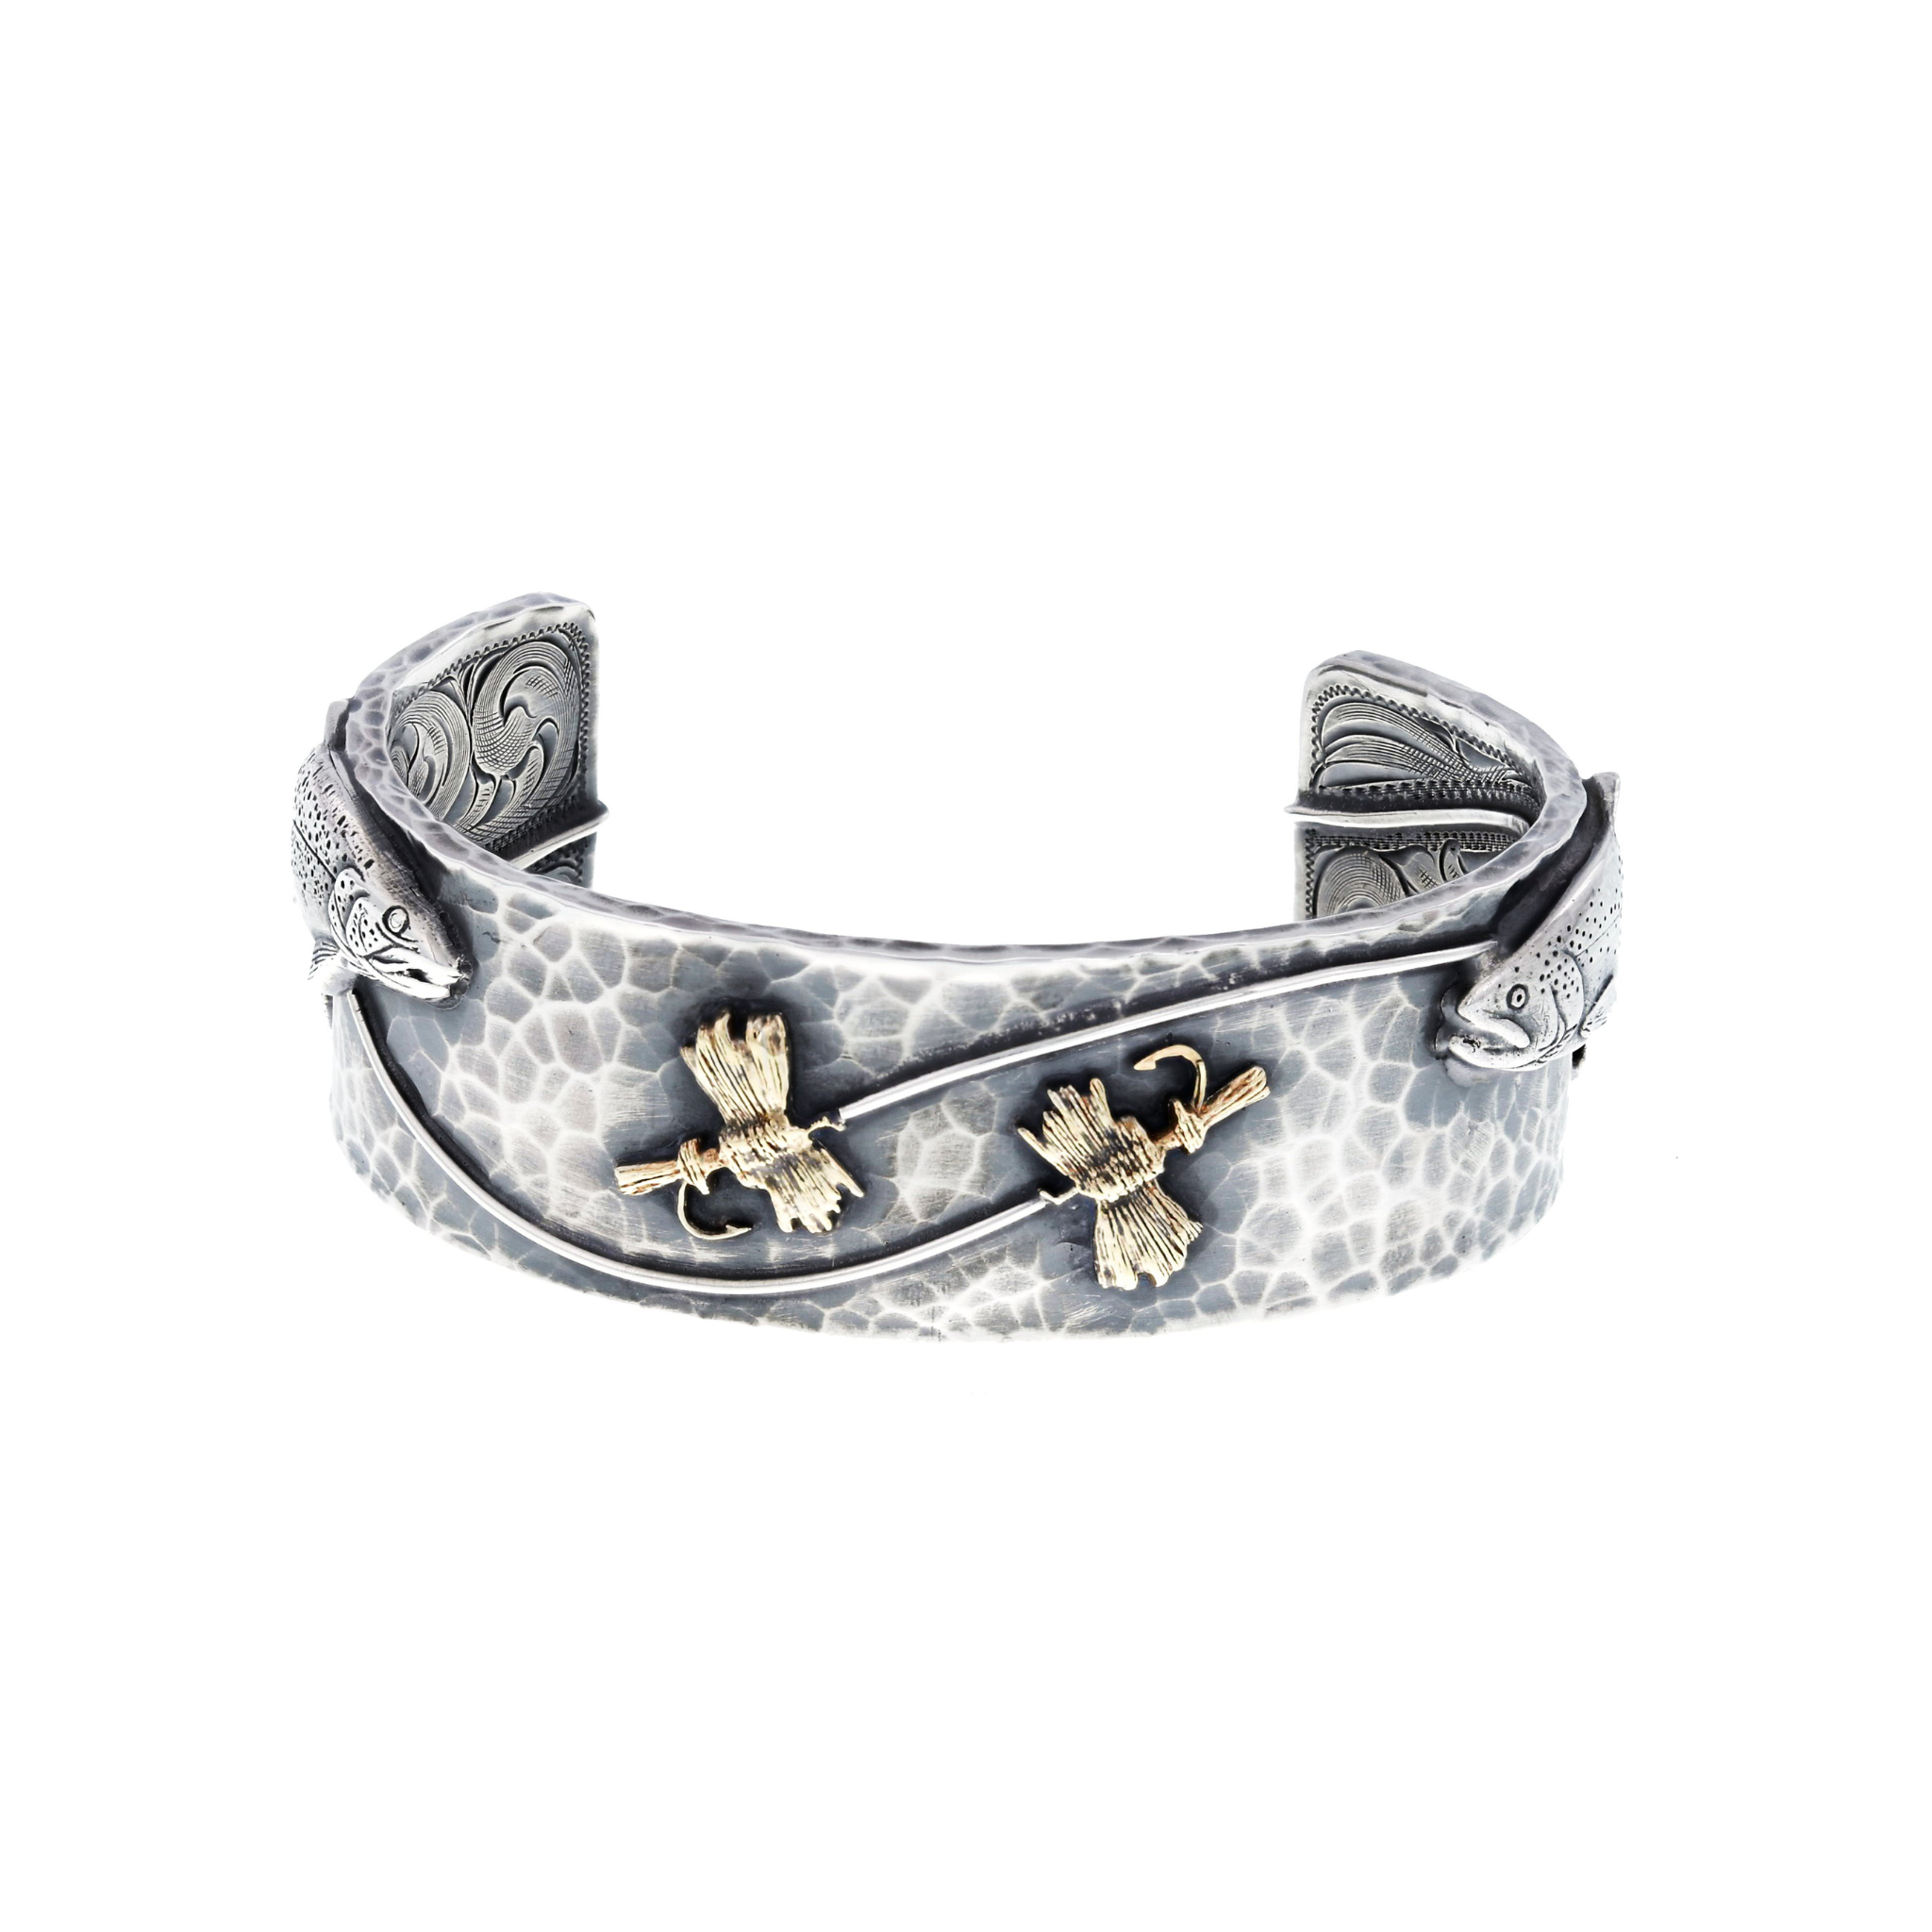 950 silver bracelet | eBay